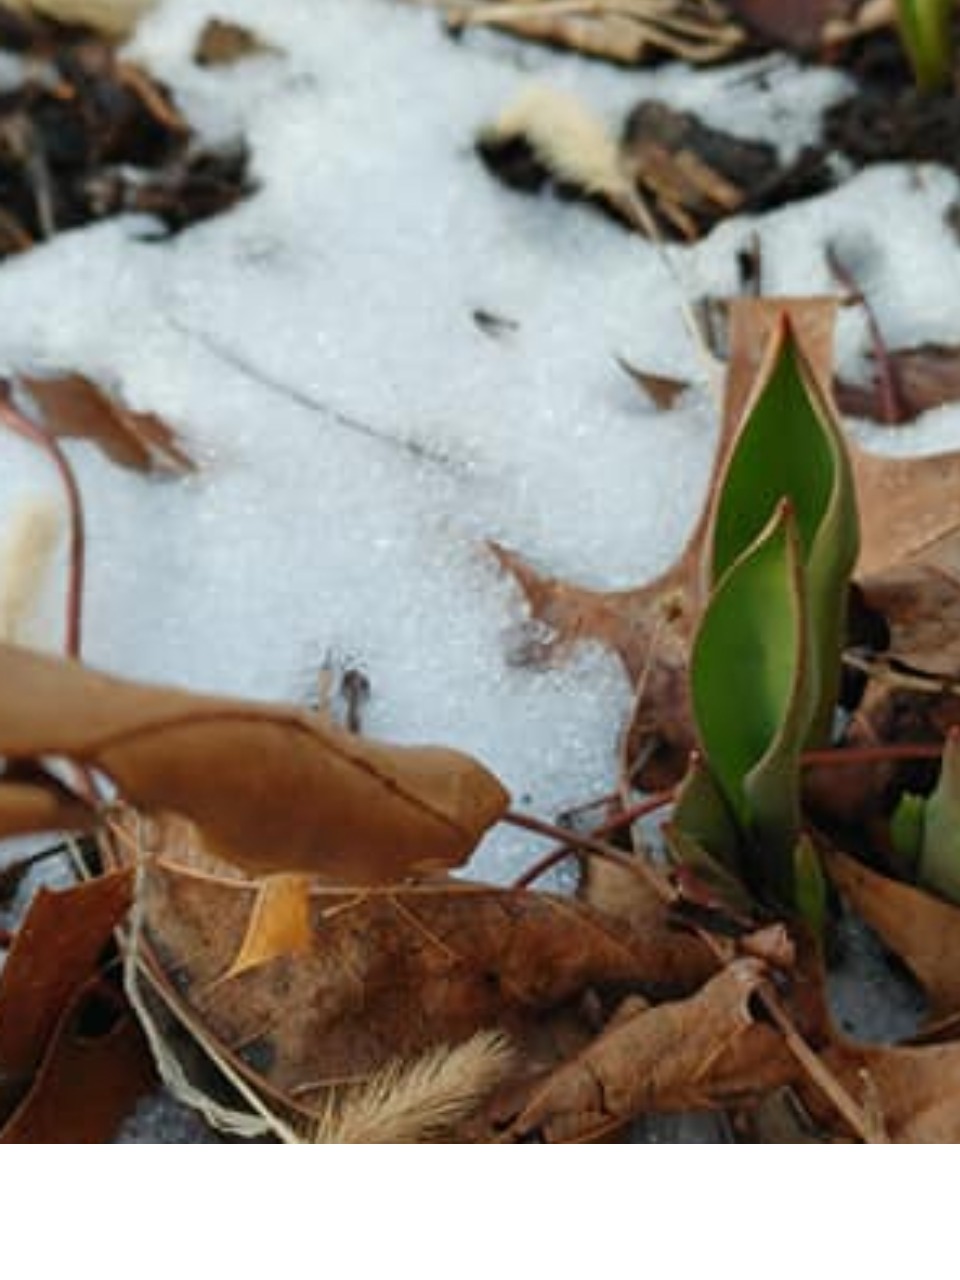 Tulip green emergence through snow